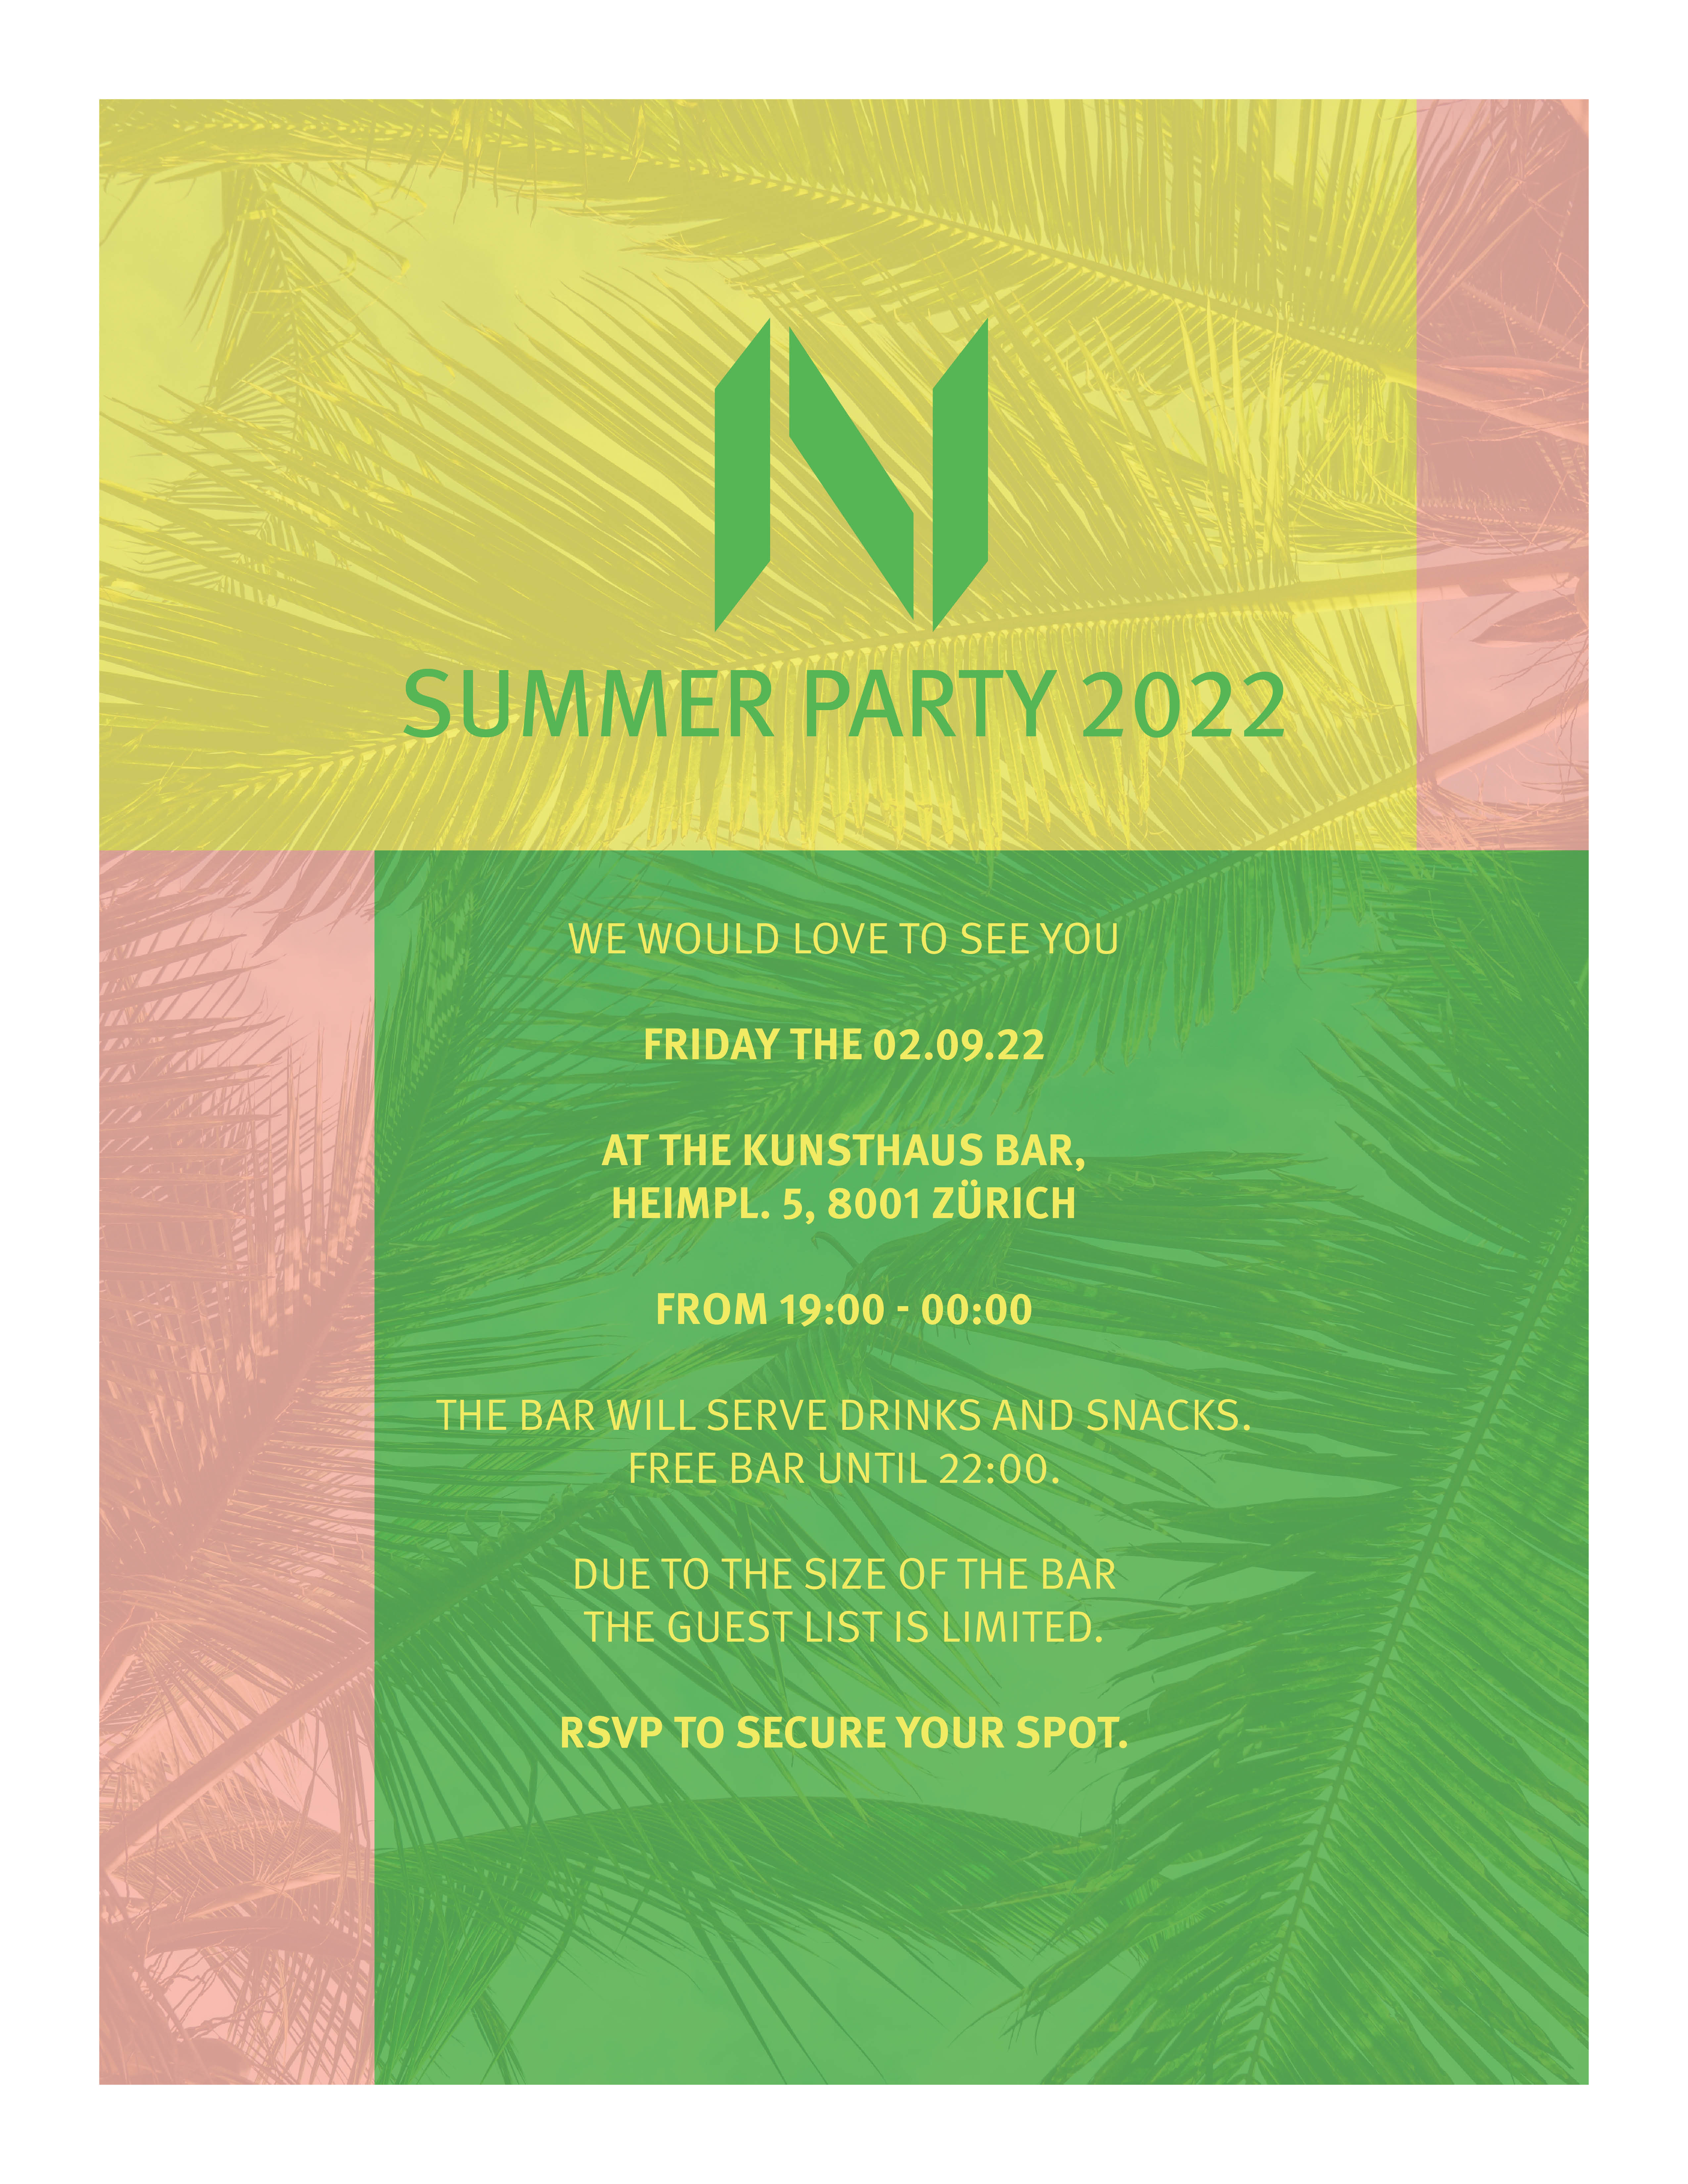 Nightnurse Images - Summer Party 2022